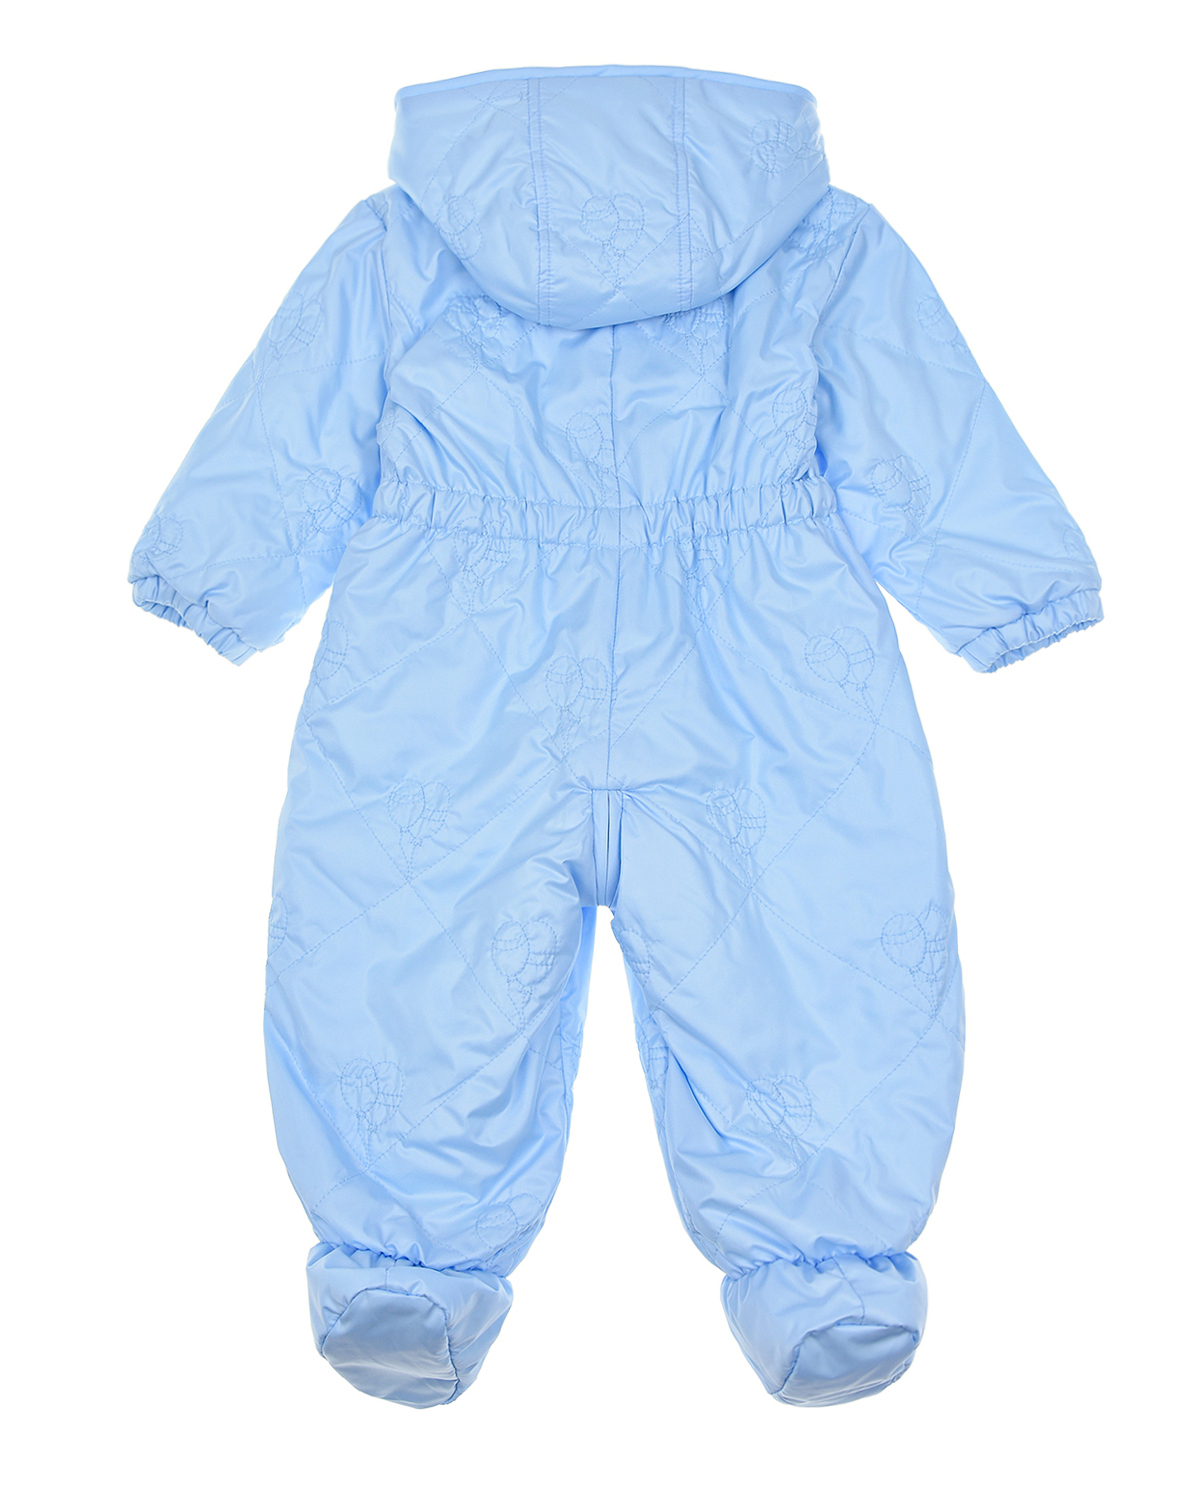 Голубой комбинезон на молнии Aletta детский, размер 62 - фото 2